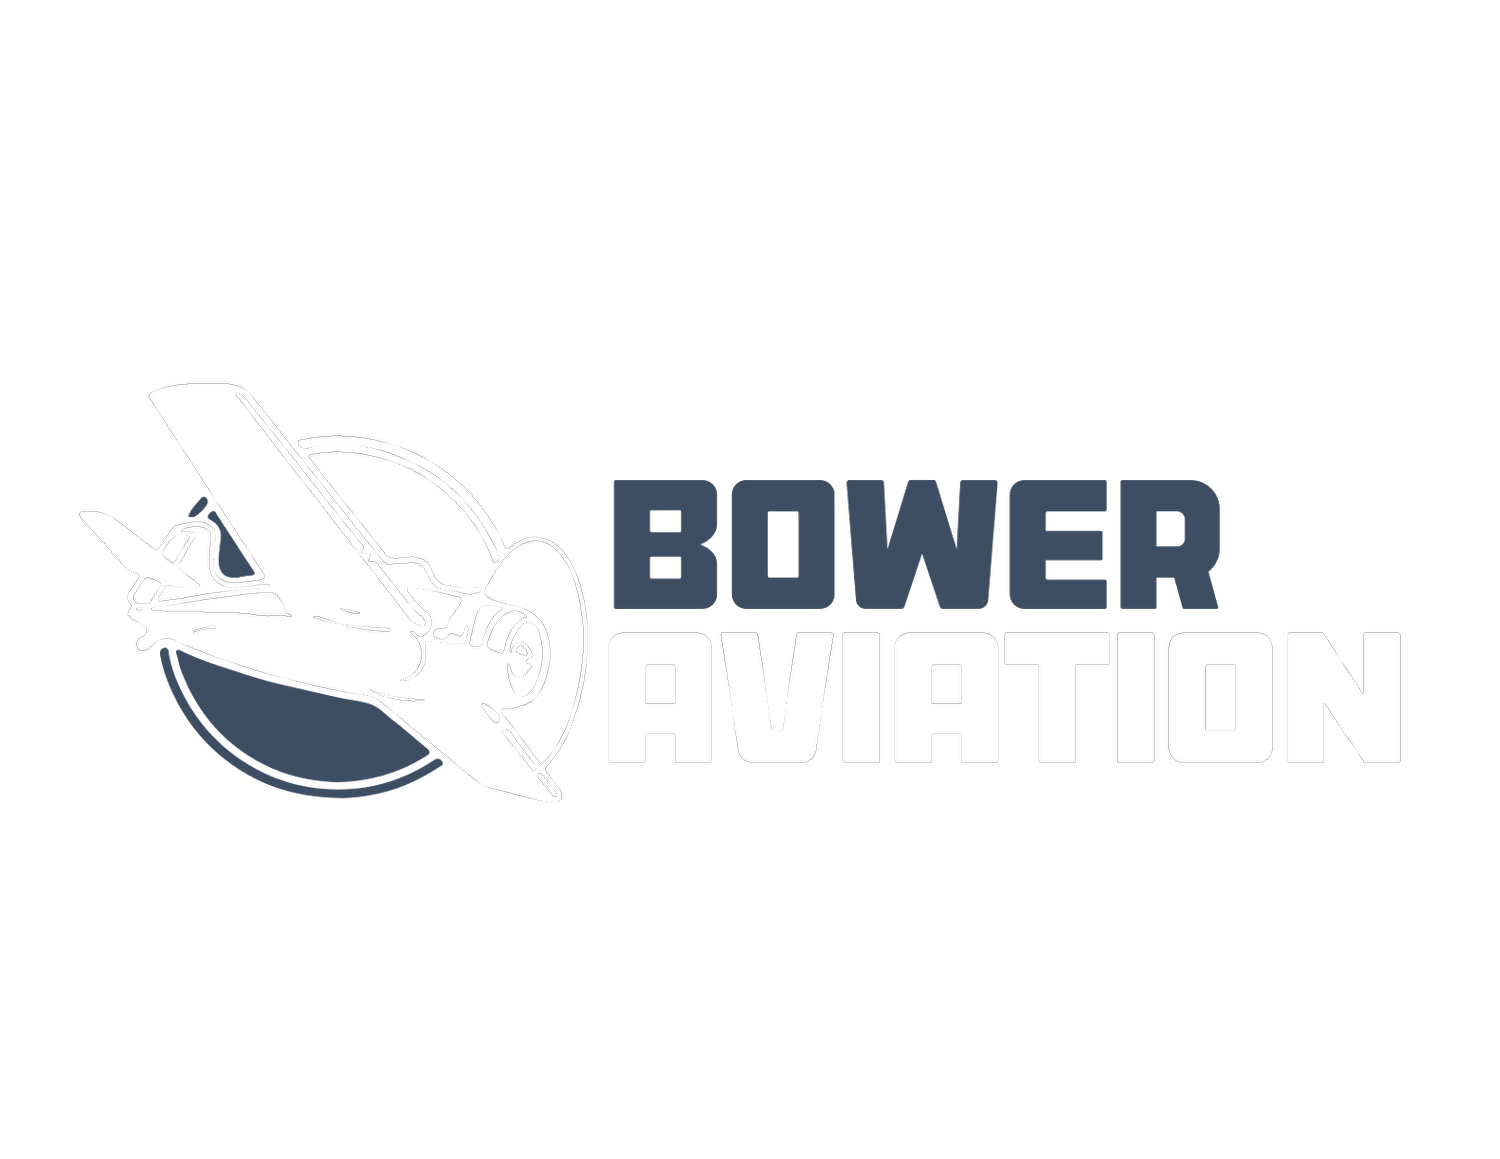 Bower Aviation